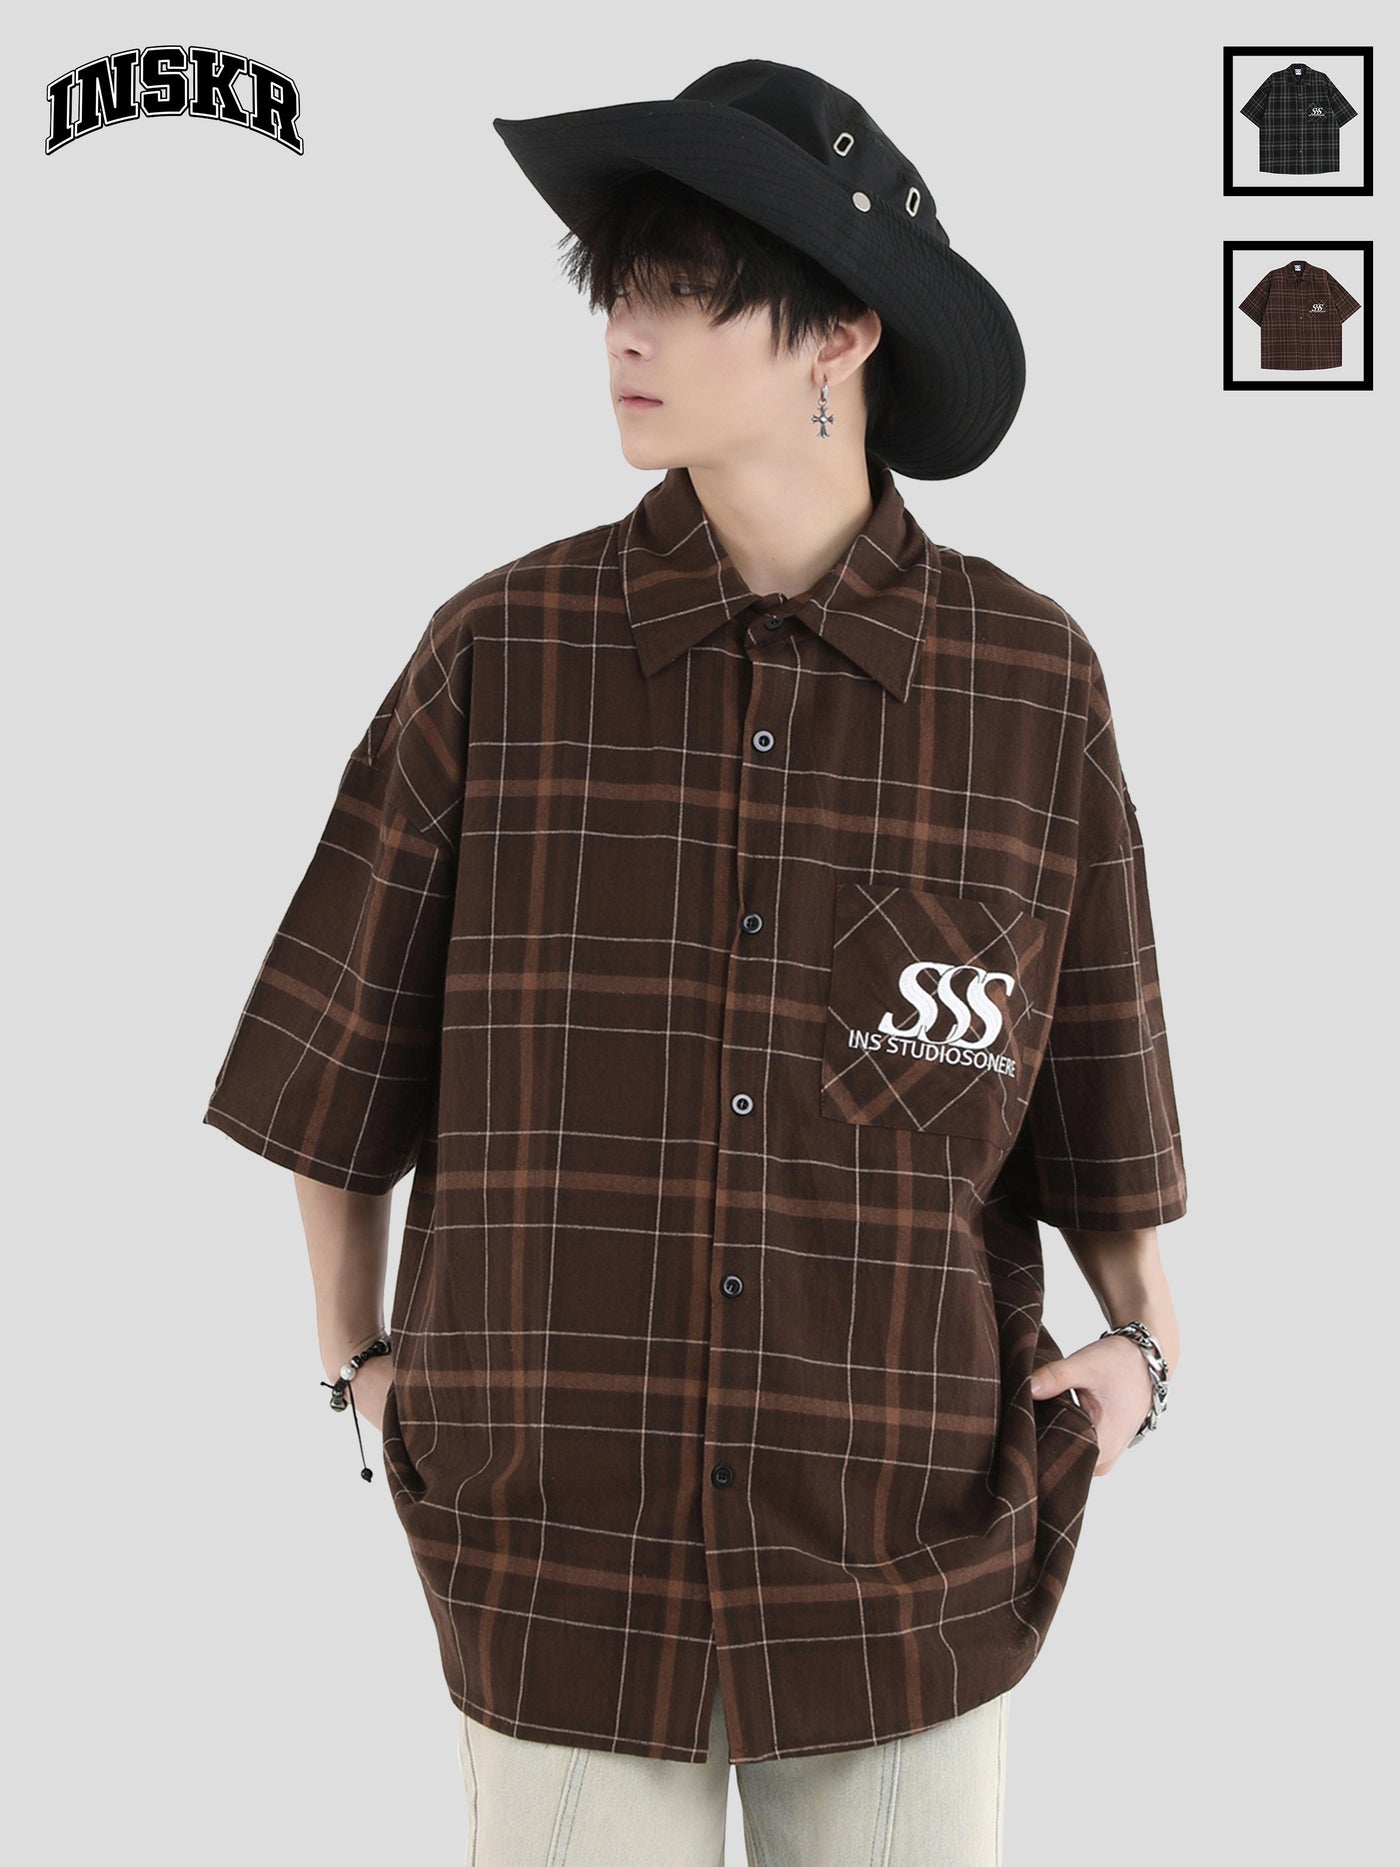 INS Korea Logo Embroidery Contrast Plaid Shirt Korean Street Fashion Shirt By INS Korea Shop Online at OH Vault